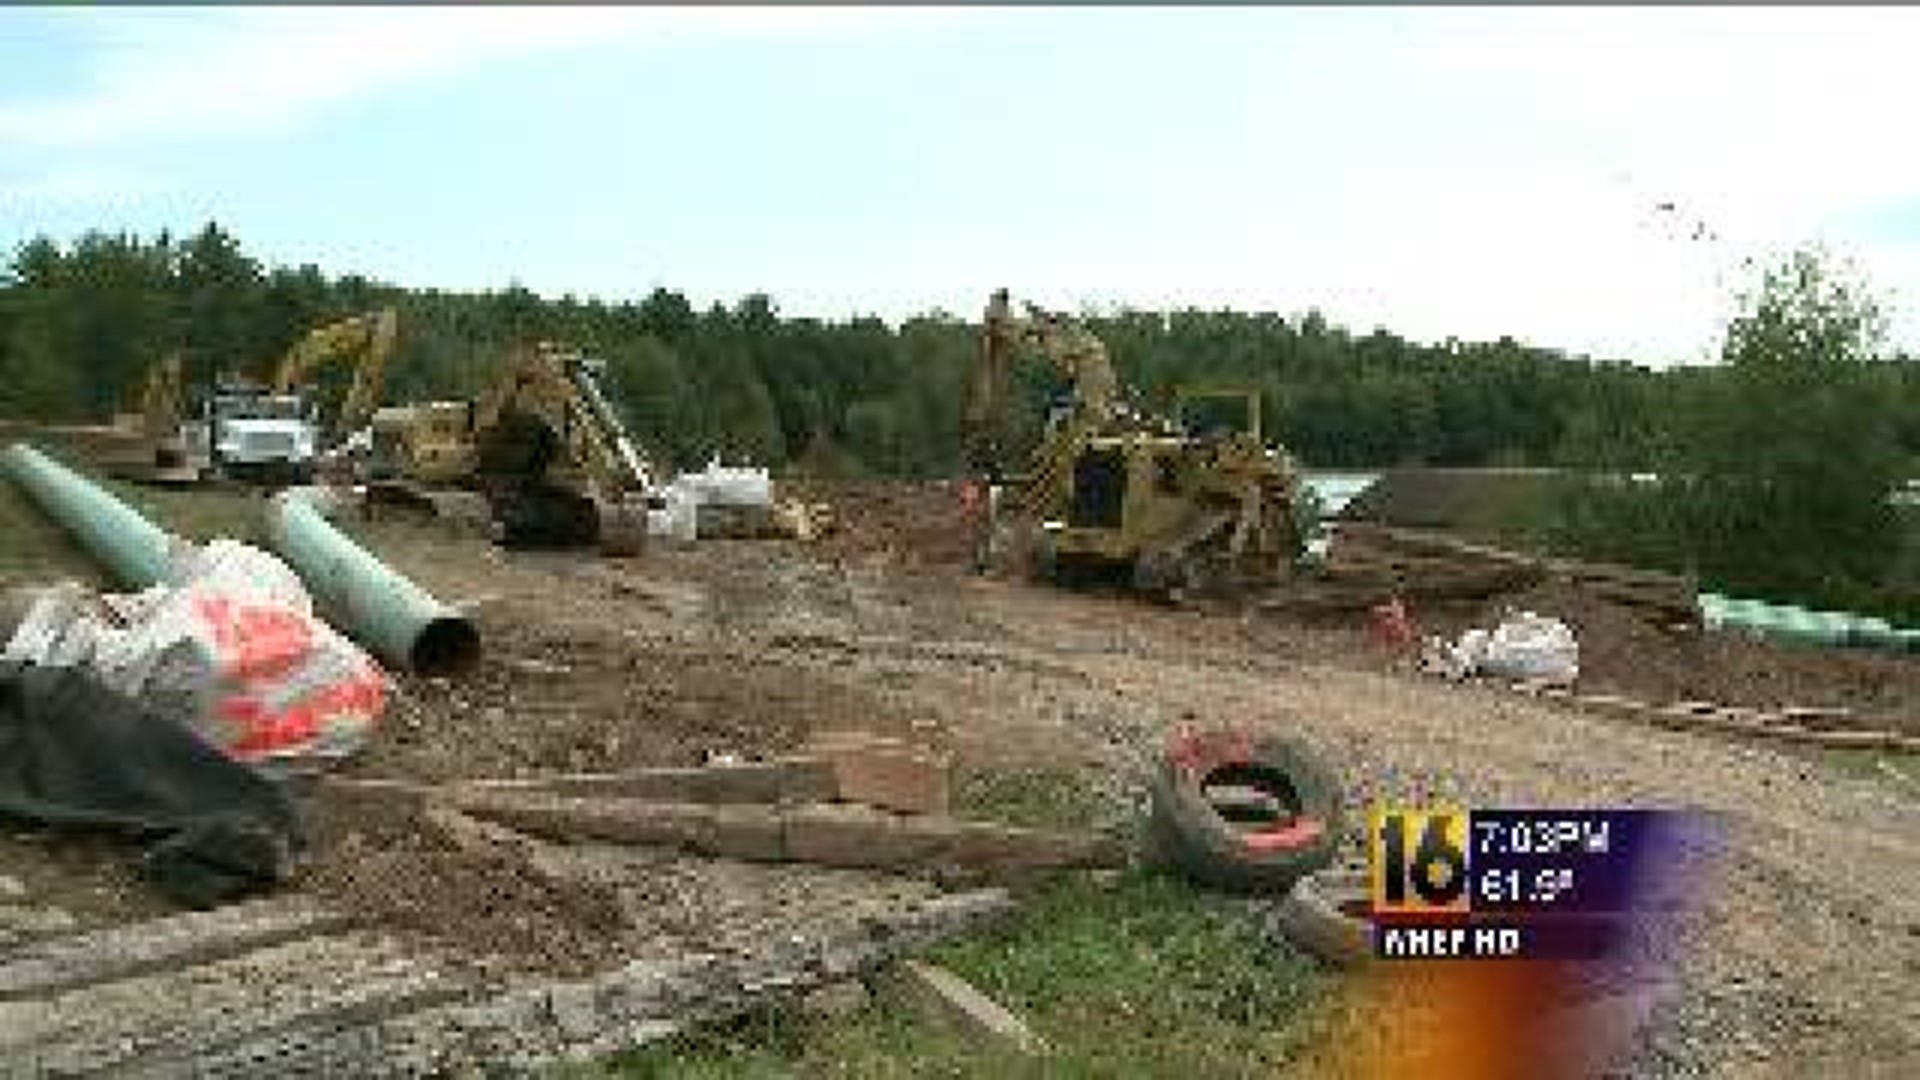 Construction Equipment Vandalized in Sullivan County